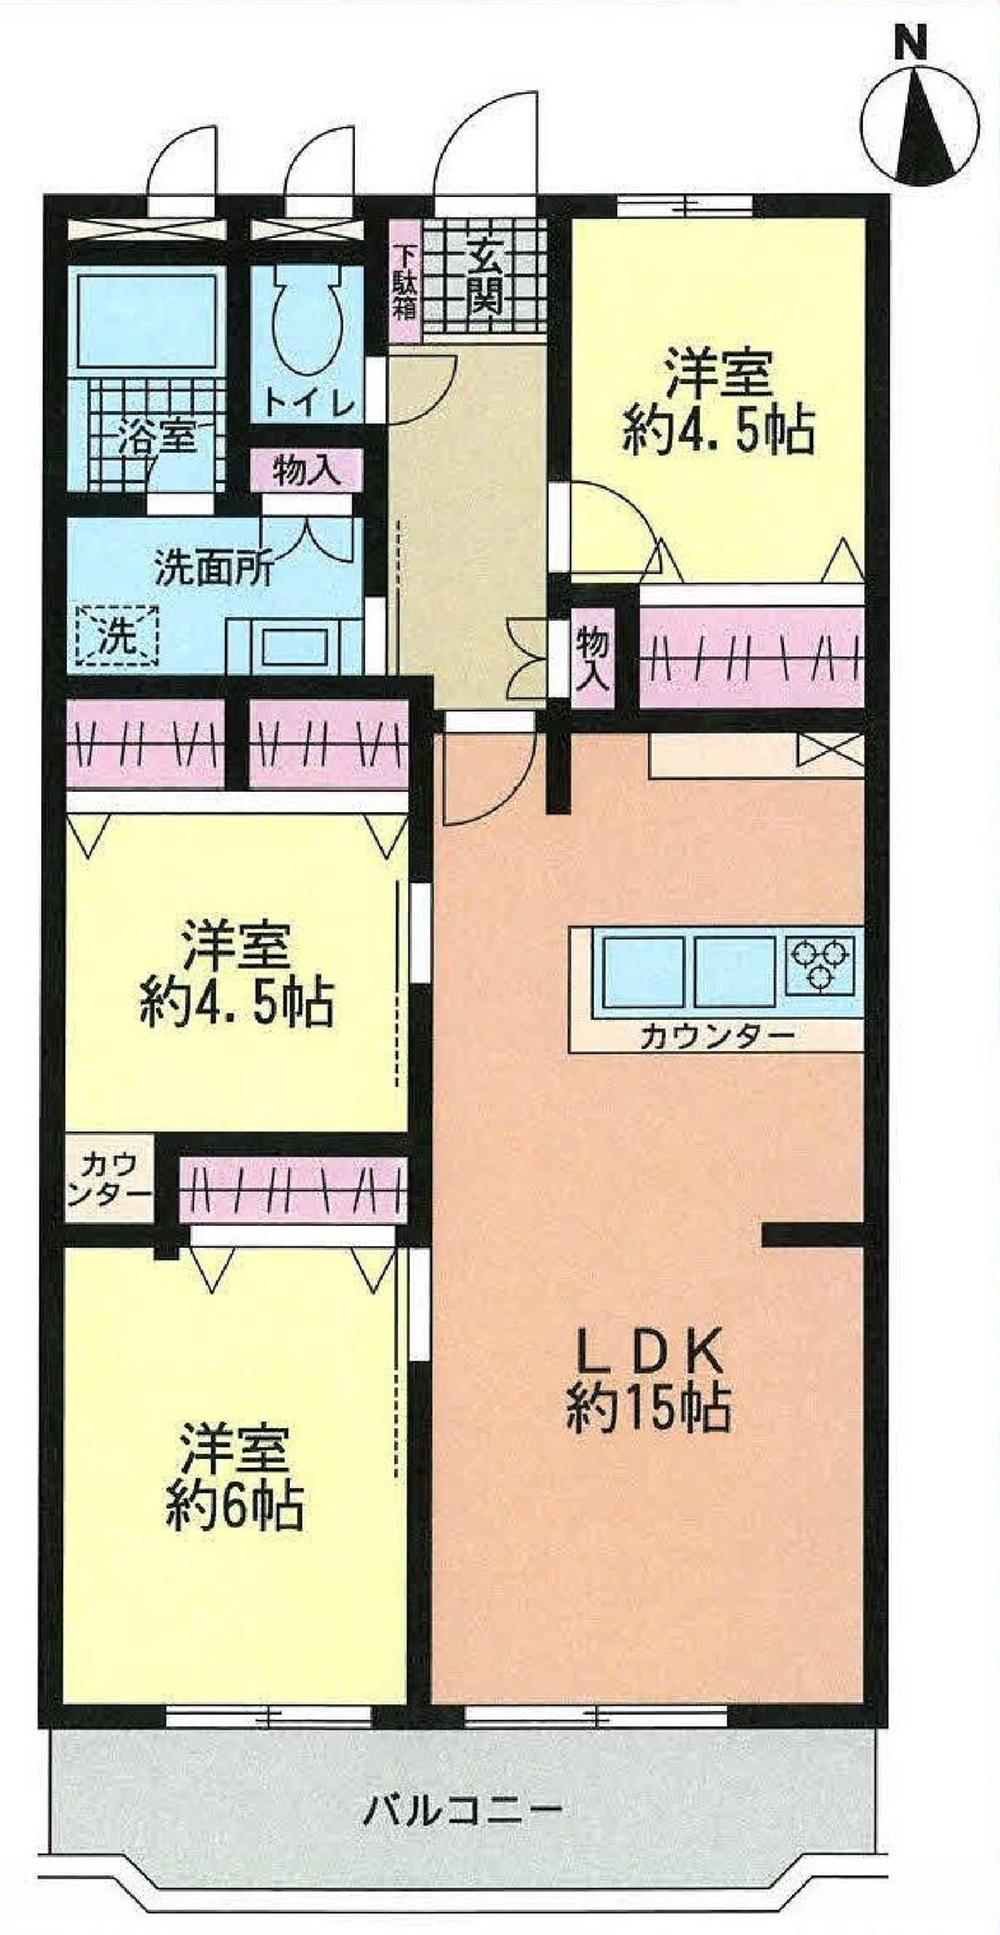 Floor plan. 3LDK, Price 23.8 million yen, Occupied area 71.61 sq m , Balcony area 6.72 sq m